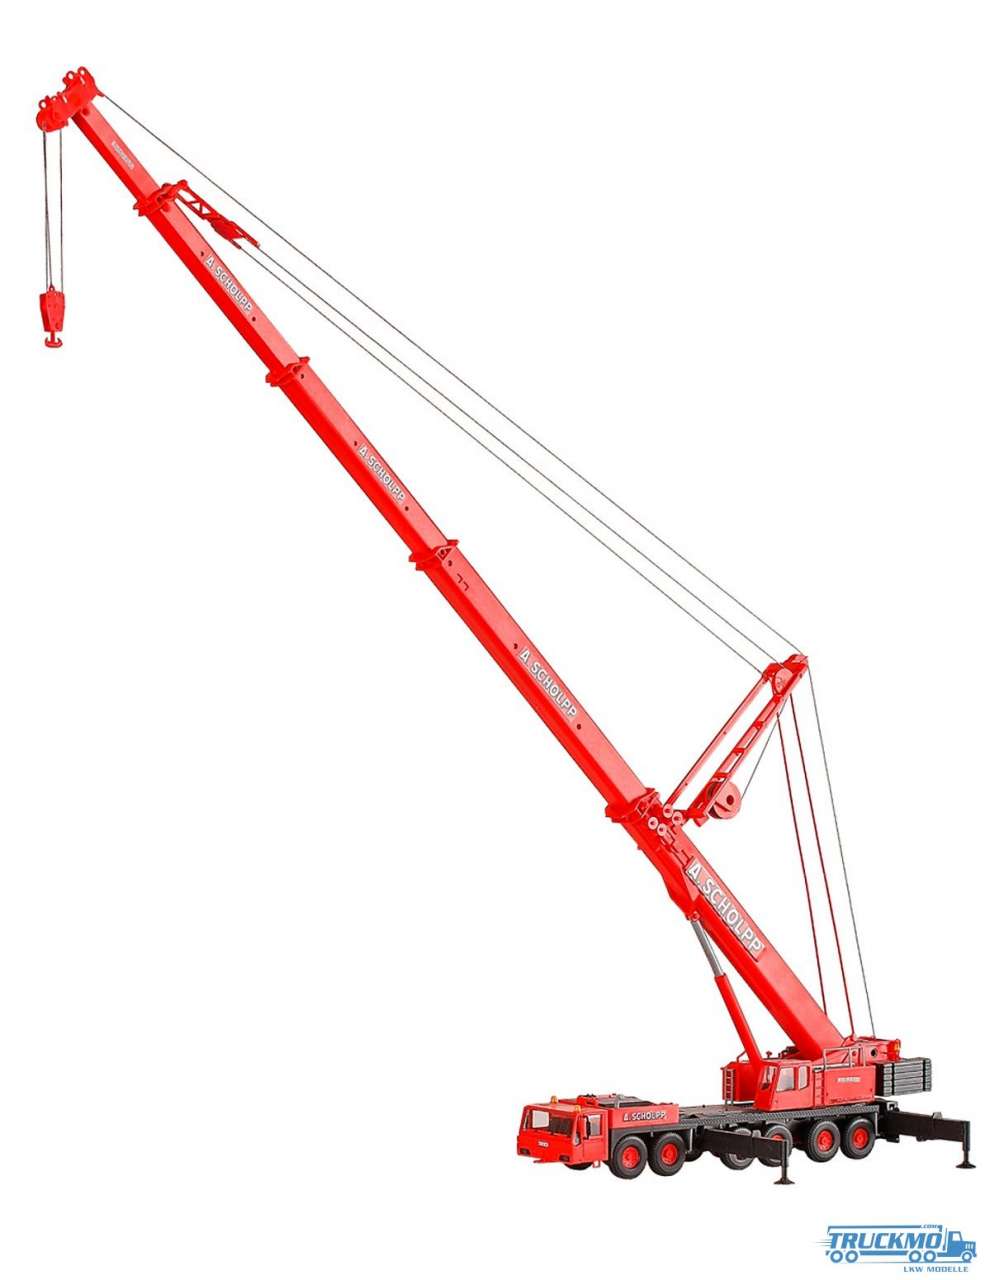 Kibri Demag AC 665 telescopic crane with superlift device 13014